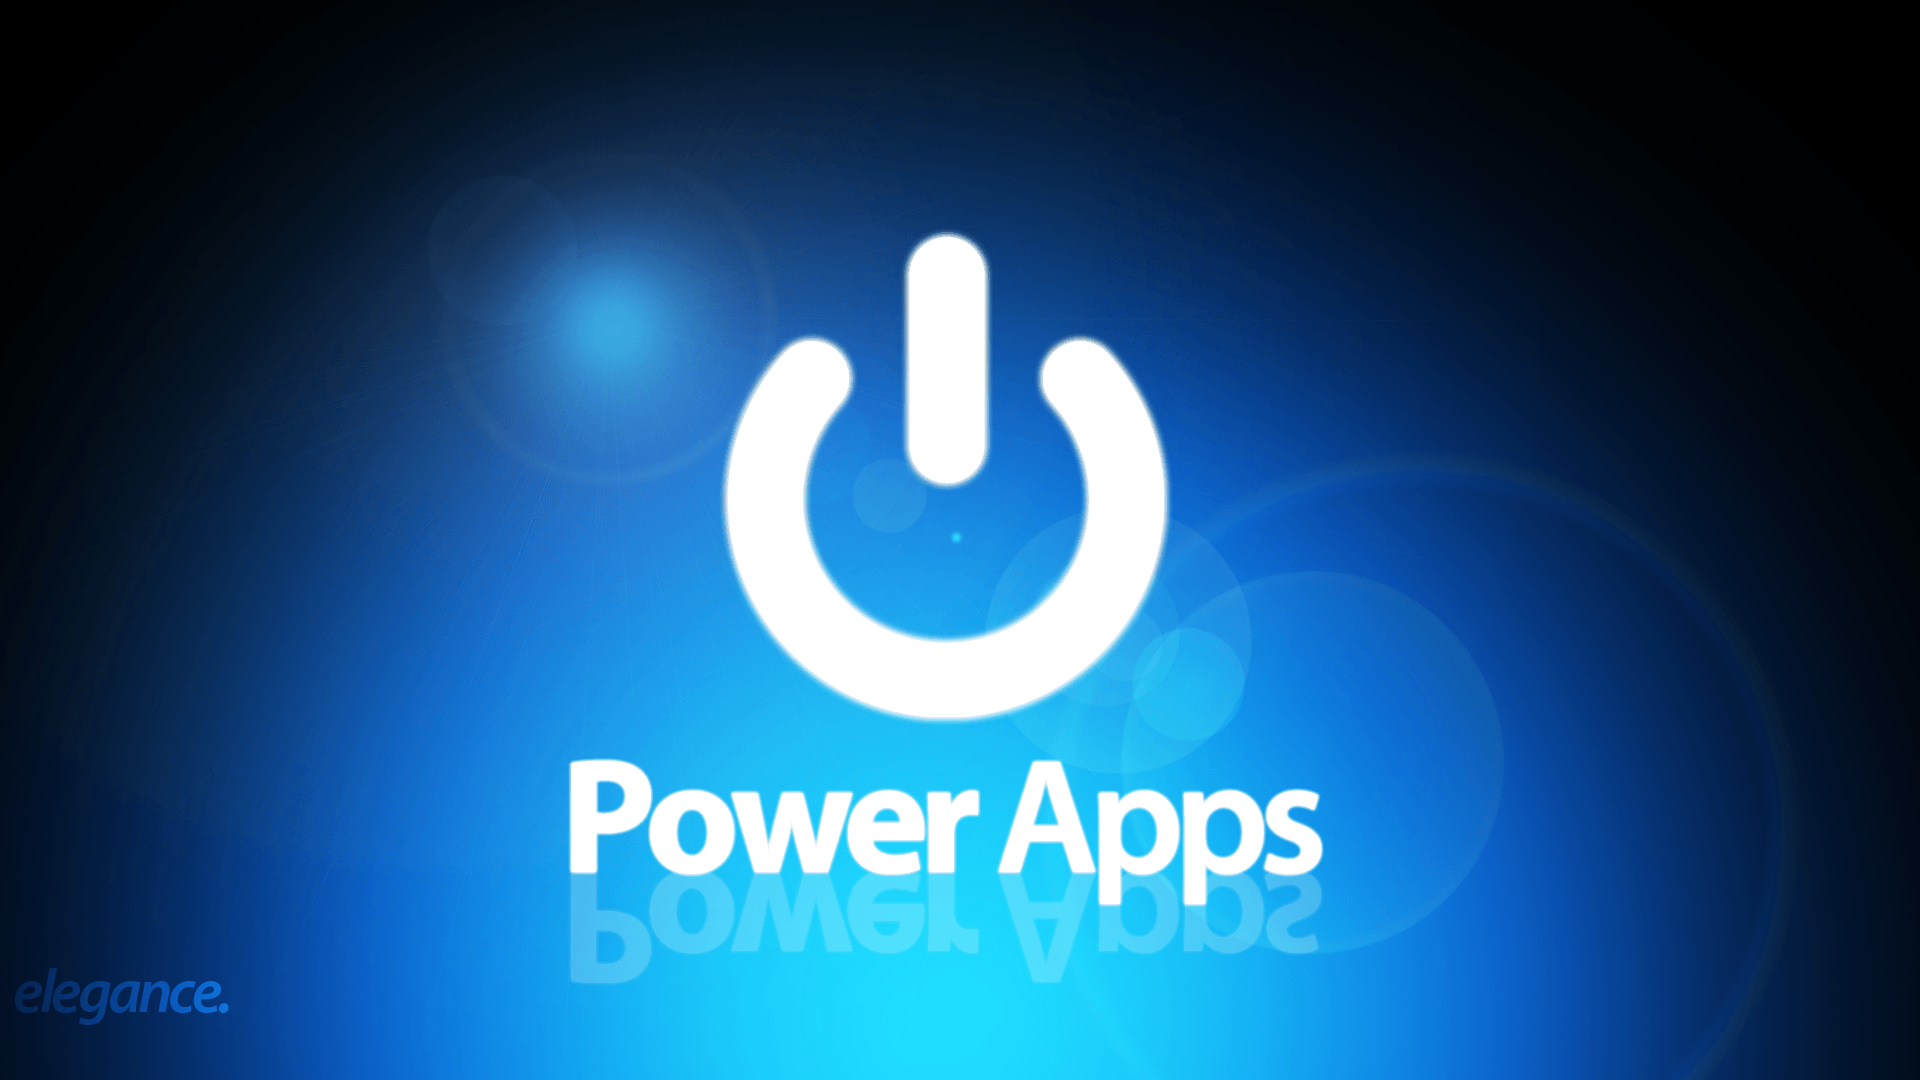 Power apps. Power обои. Приложения Power apps фон. Пау. Приложение пауэр